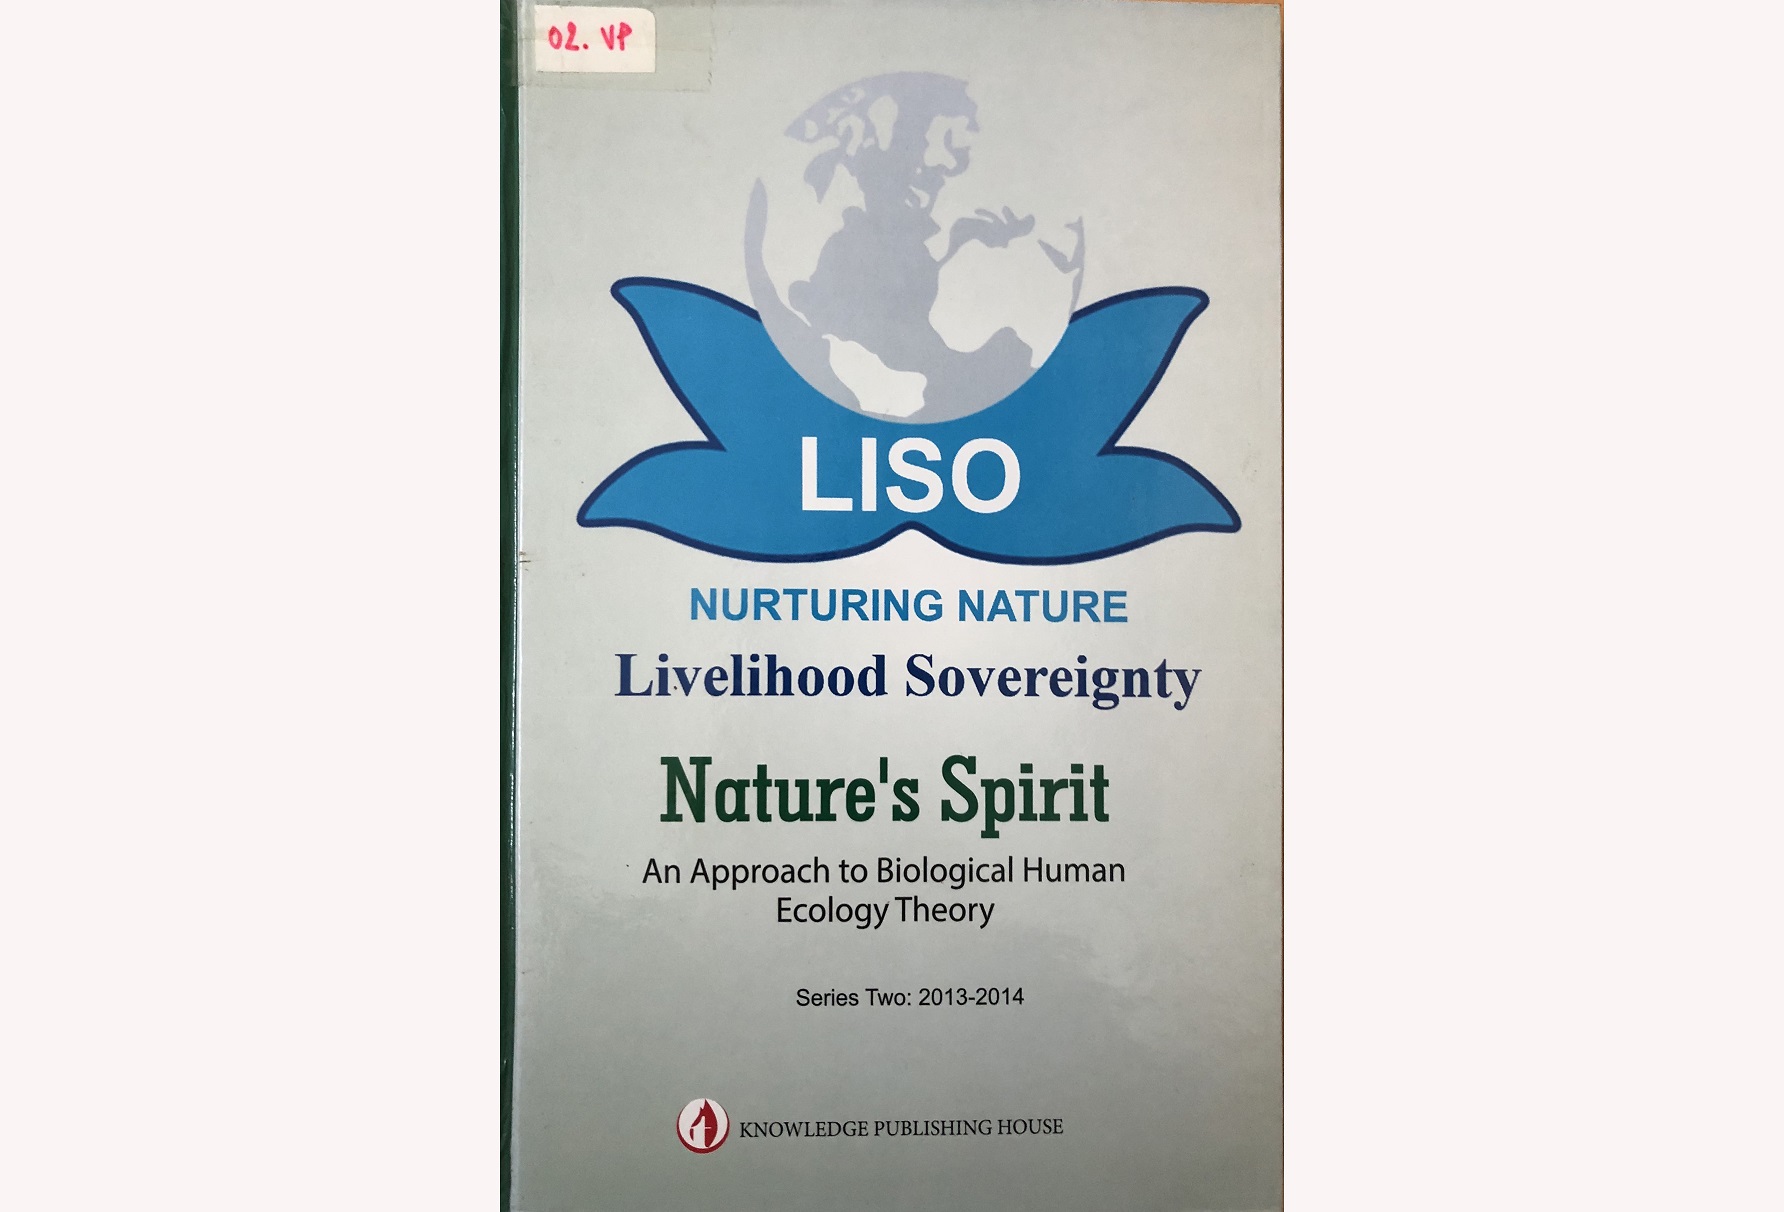 Nature's Spirit - An approach Biological Human Ecology Theory